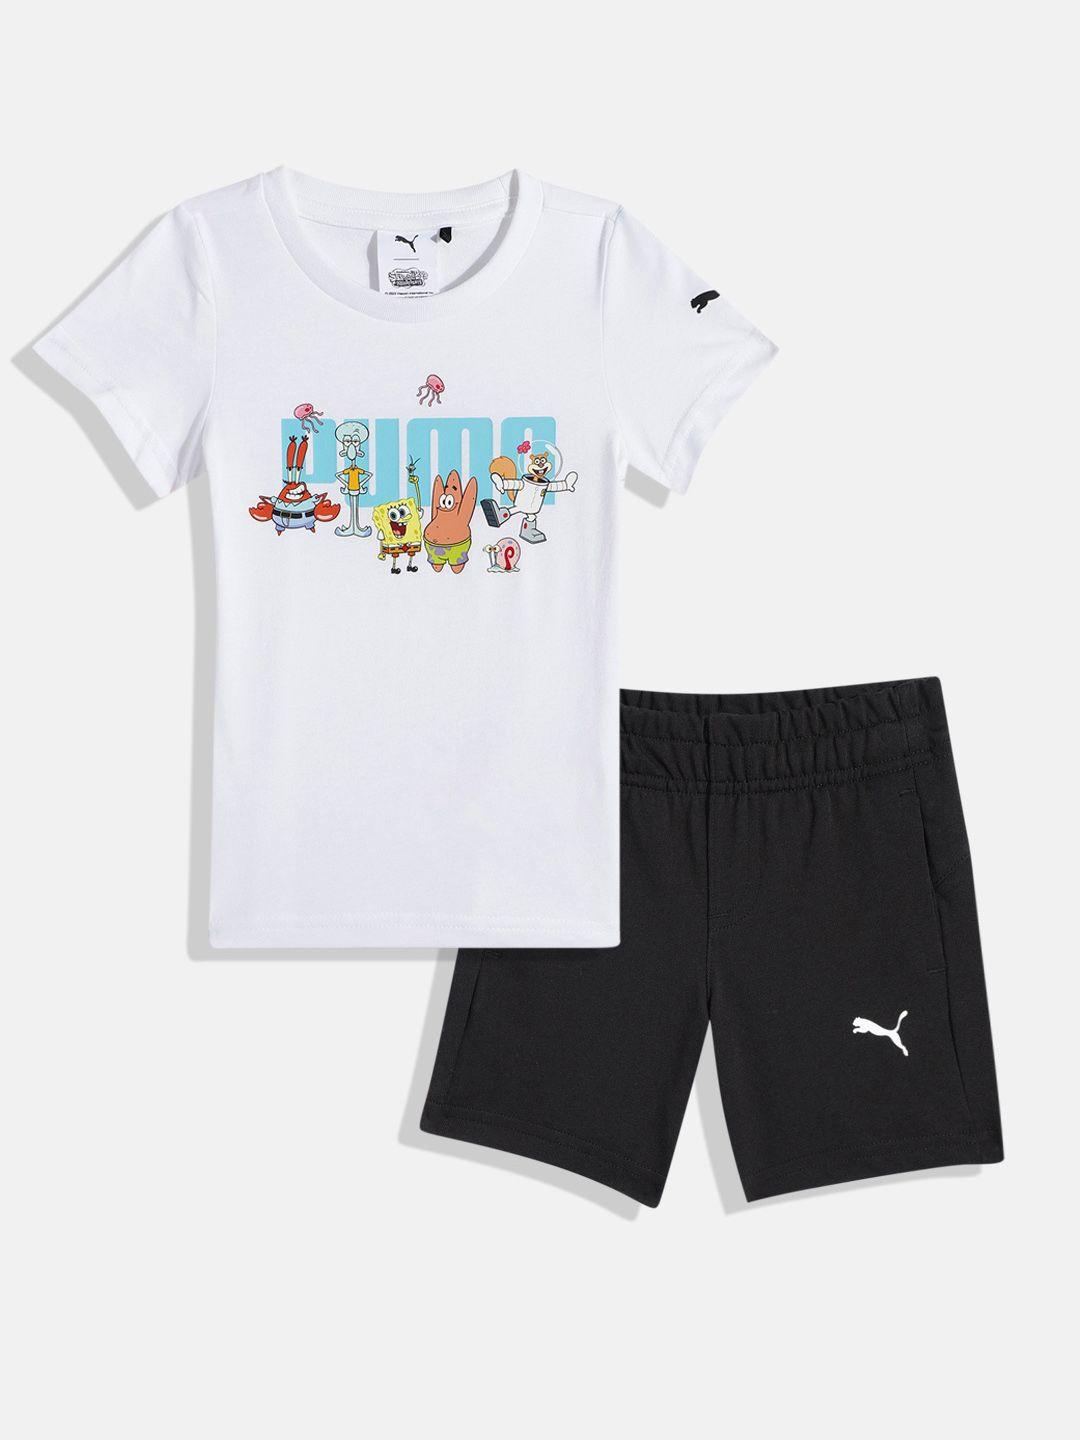 puma x spongebob kids printed pure cotton t-shirt with shorts